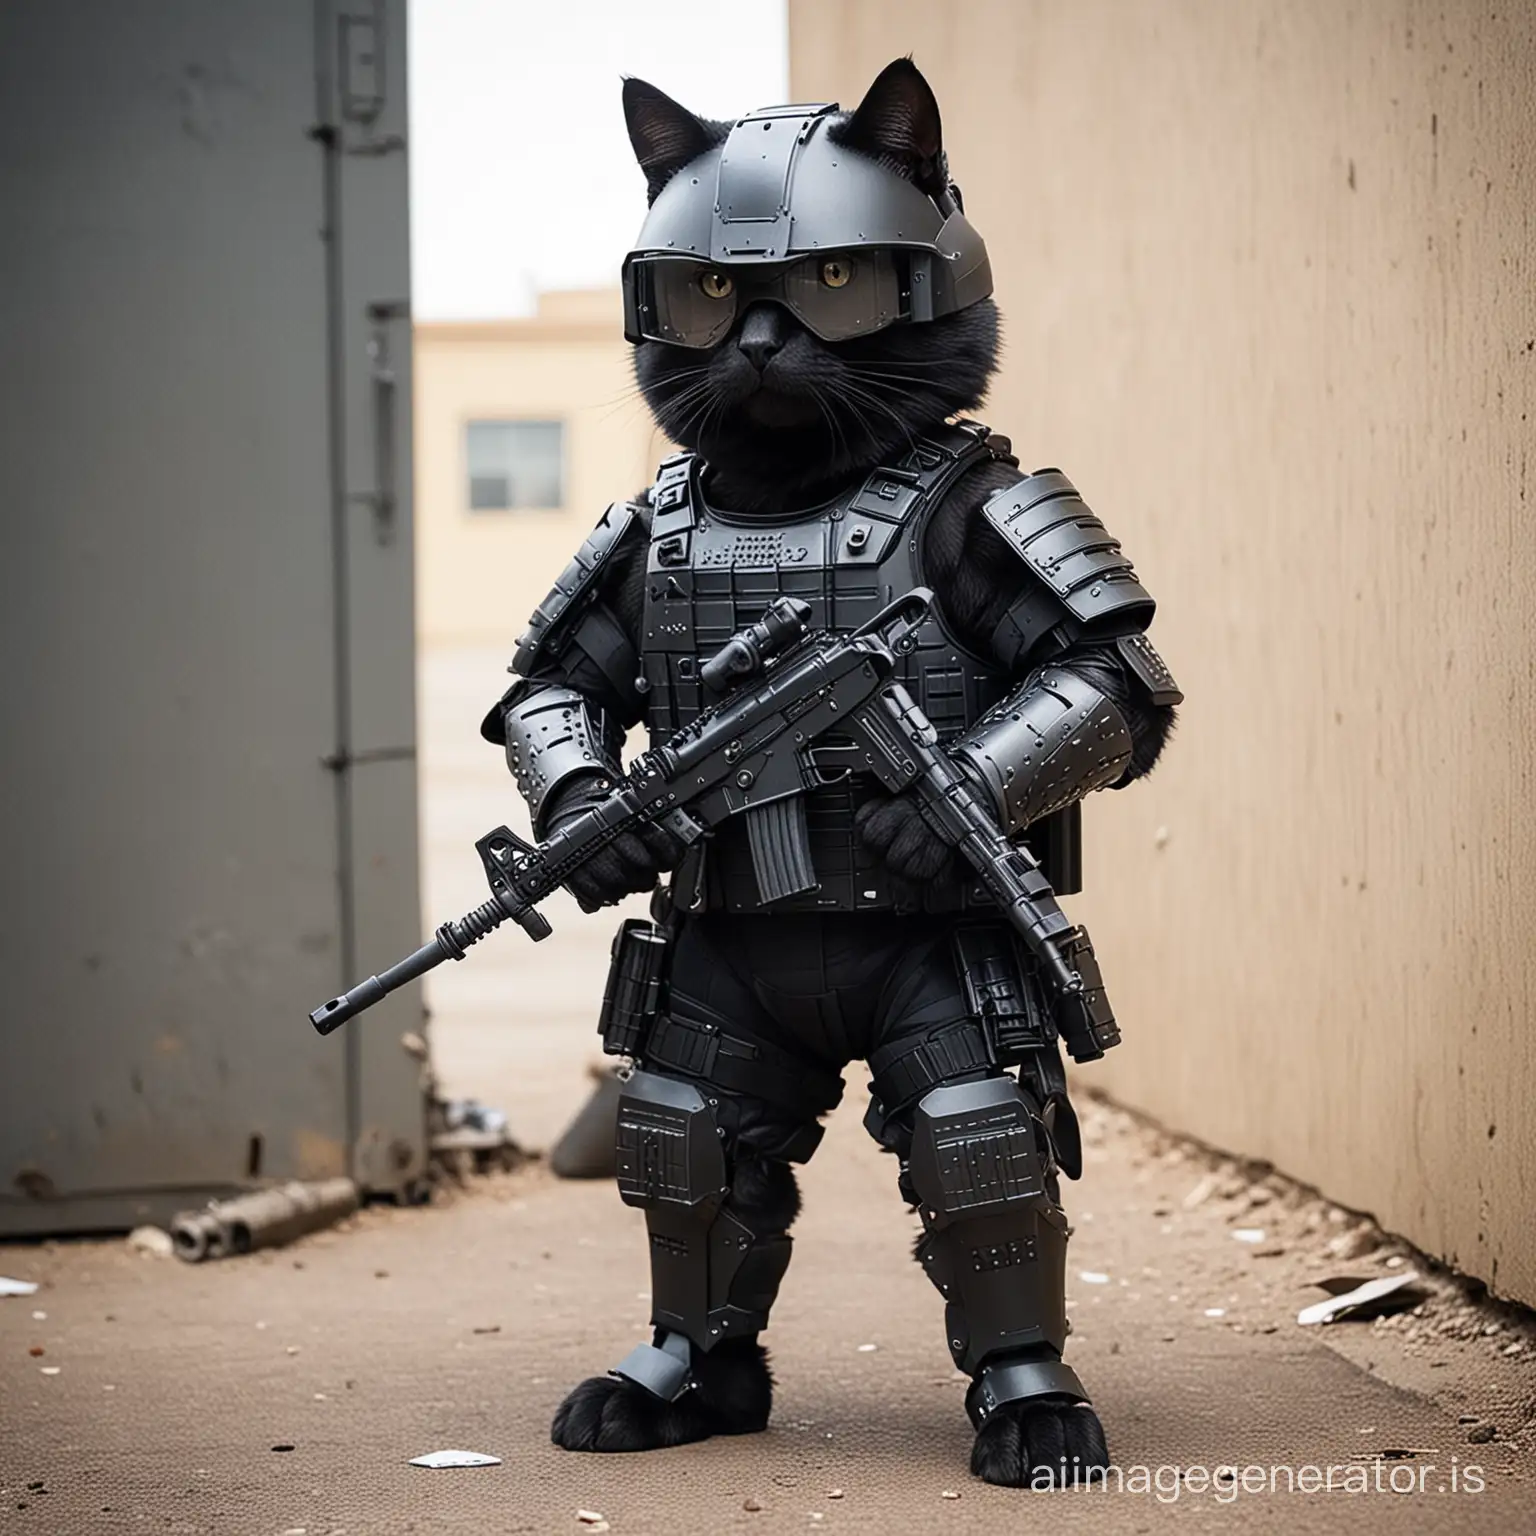 Armored-SWAT-Cat-in-Urban-Battle-Scene